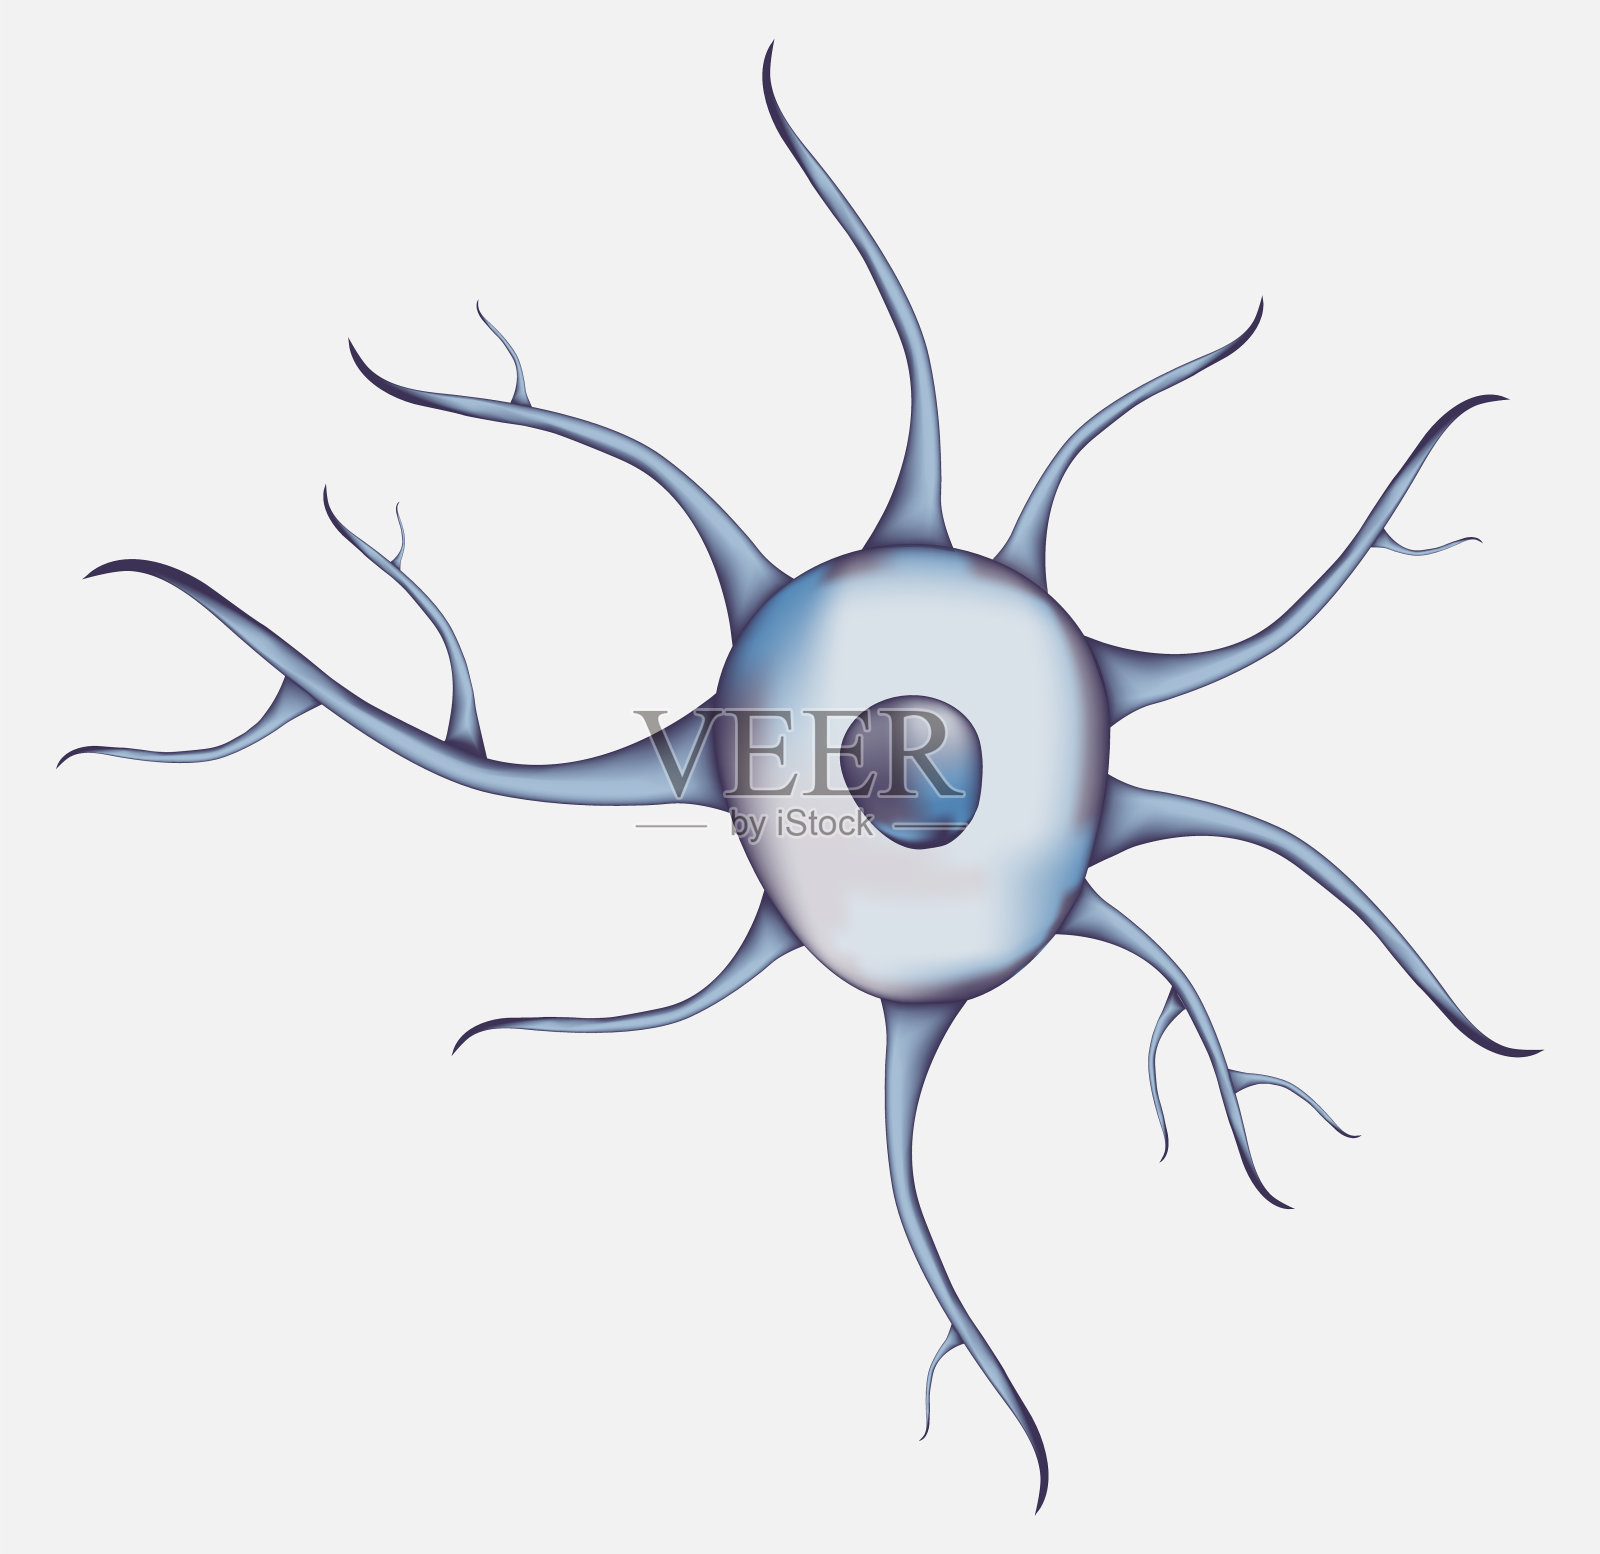 3d白色背景上分离出的蓝色人类神经元。现实的矢量图。模板插画图片素材